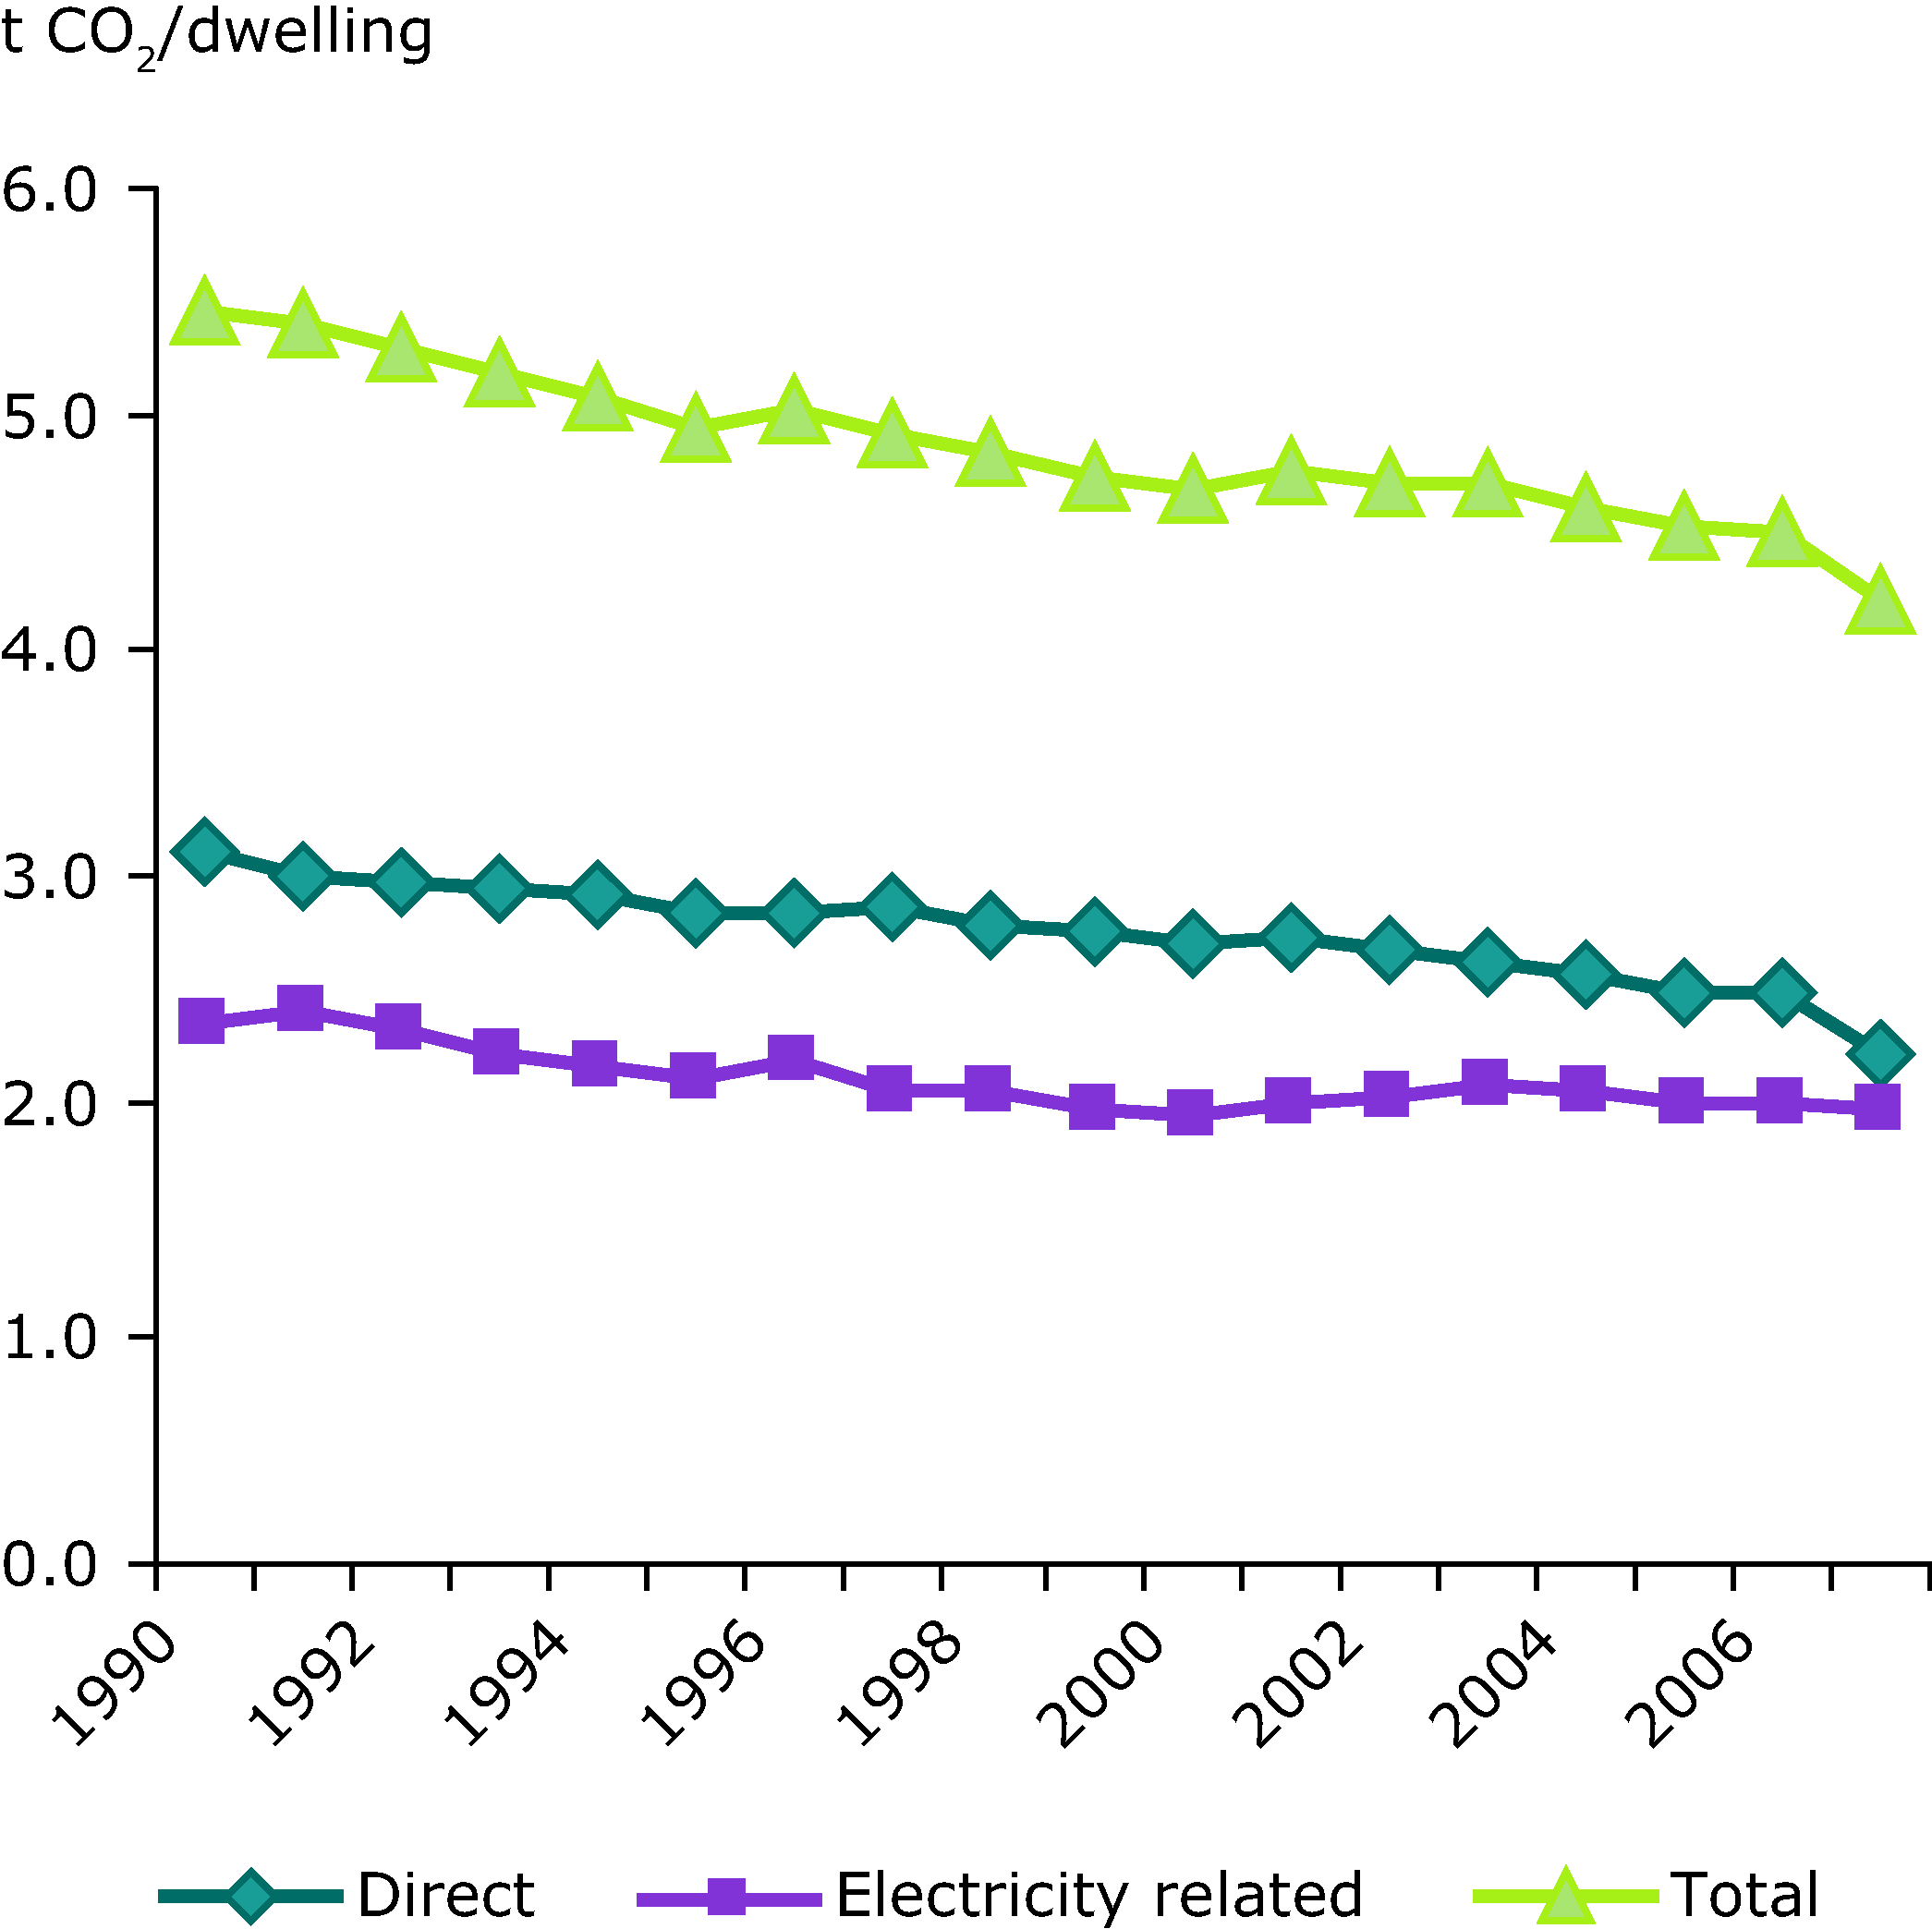 CO2 emissions per dwelling, climate corrected (EU-27)